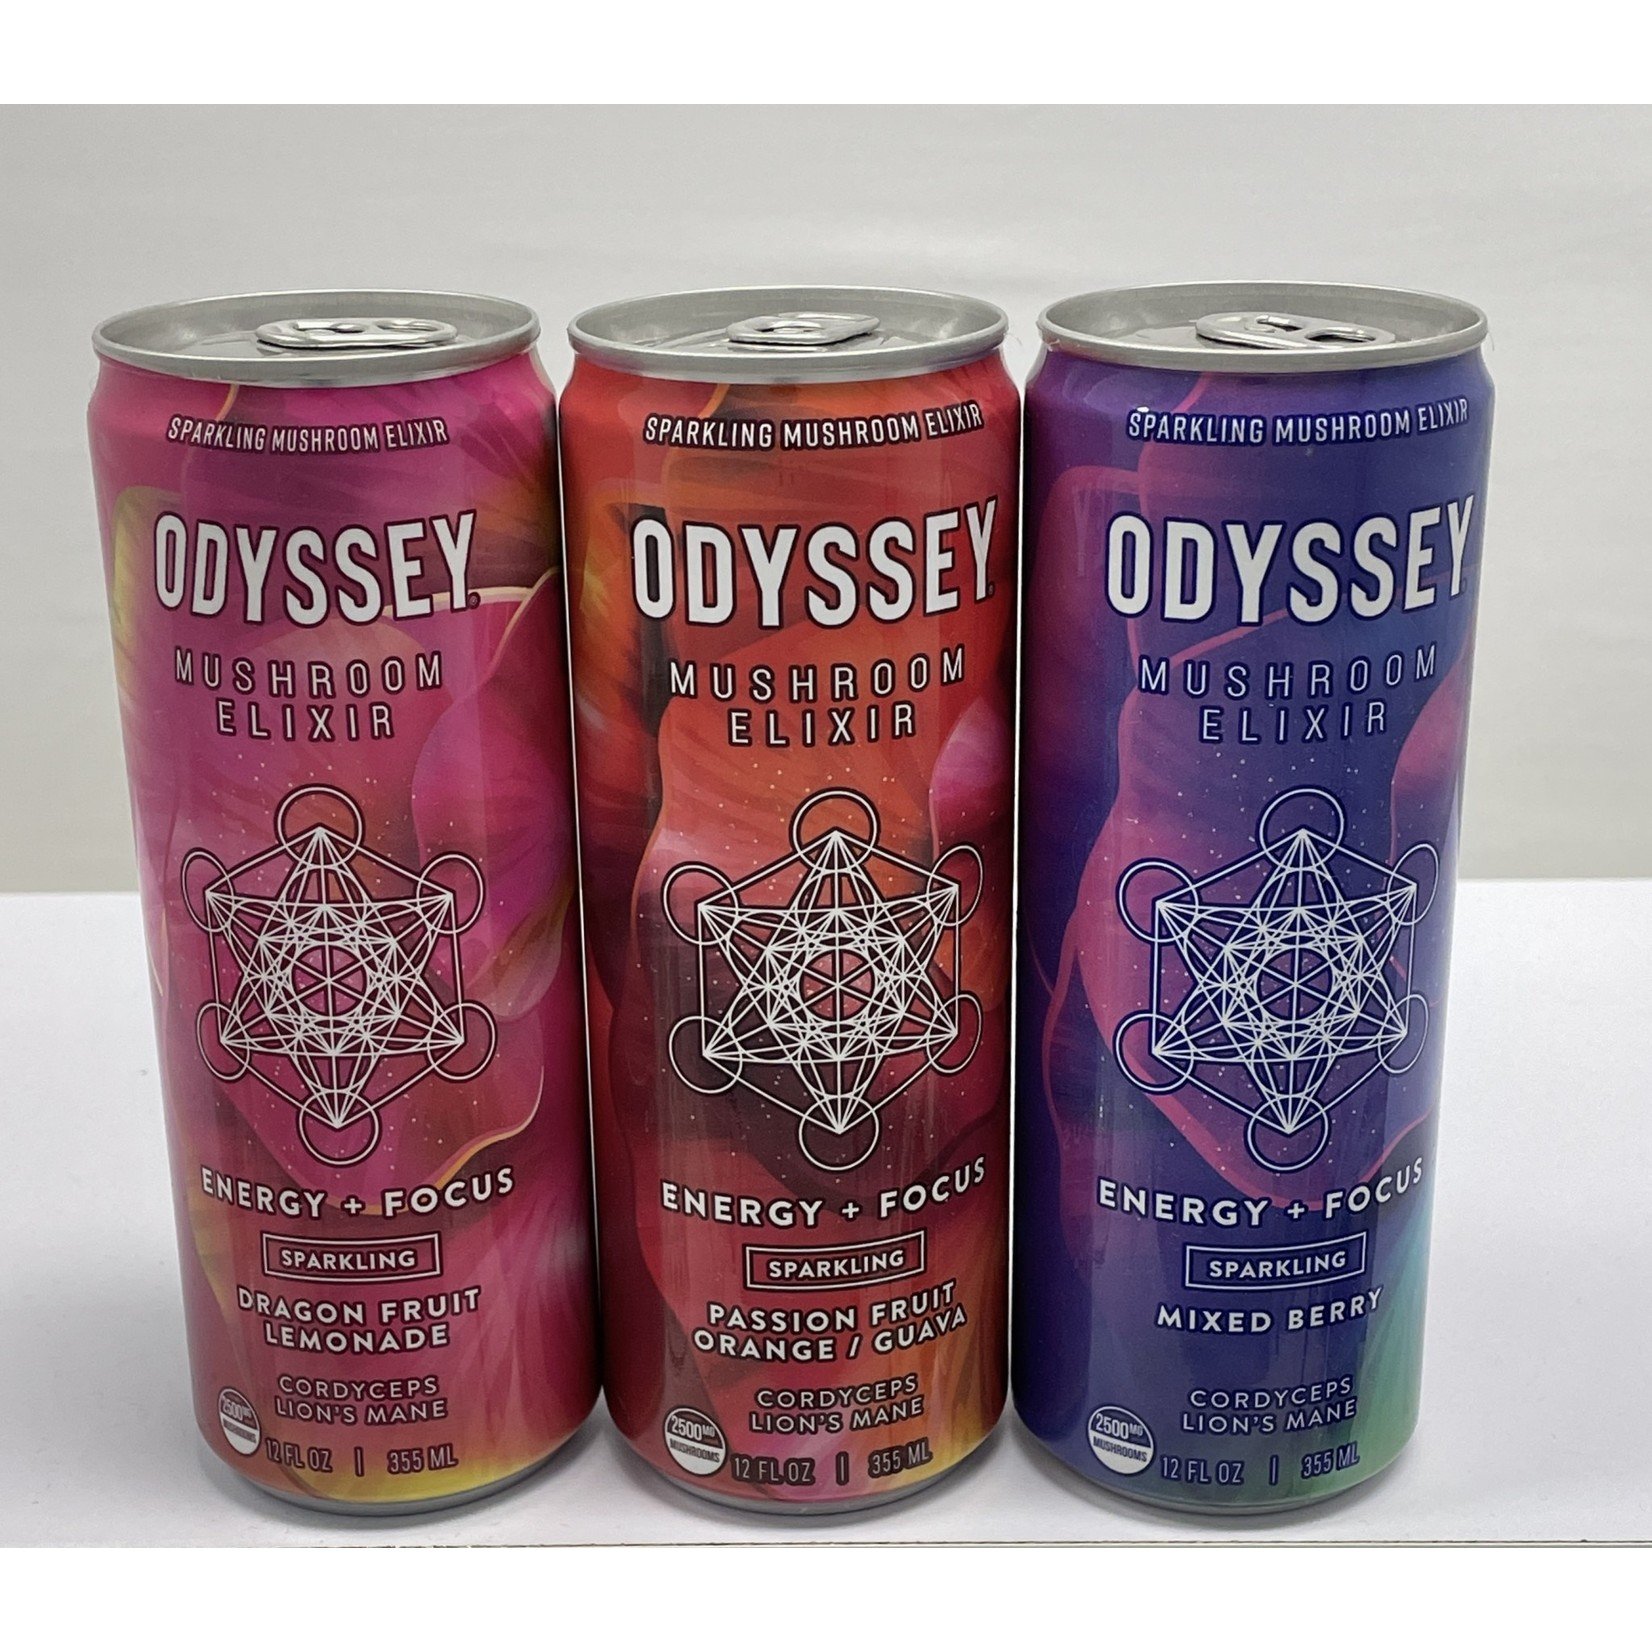 Odyssey Odyssey Mushroom Elixir Energy + Focus 12oz